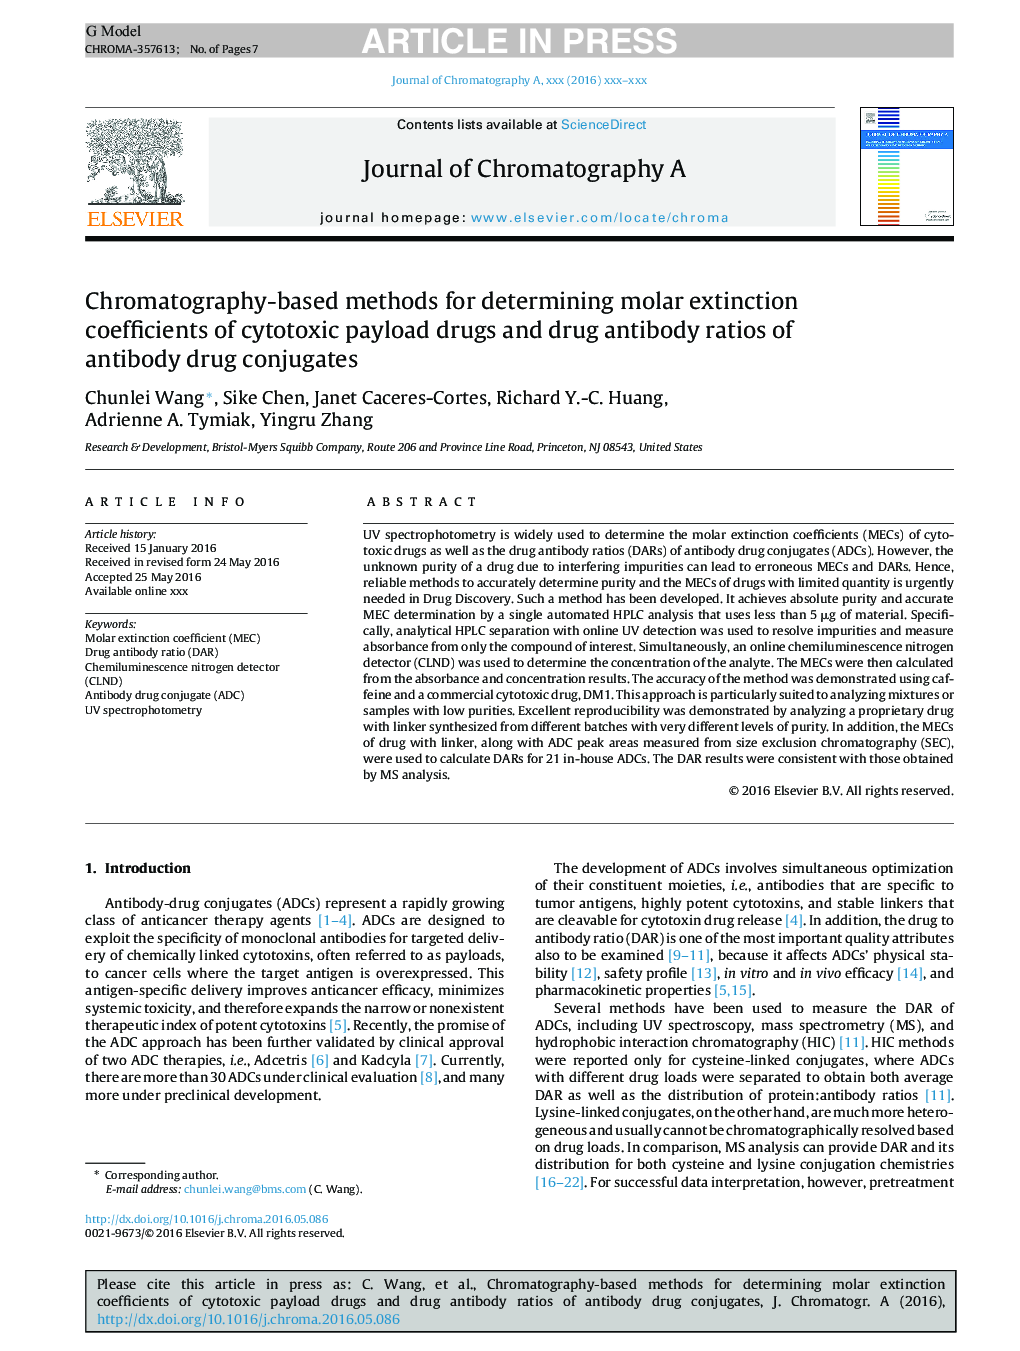 Chromatography-based methods for determining molar extinction coefficients of cytotoxic payload drugs and drug antibody ratios of antibody drug conjugates